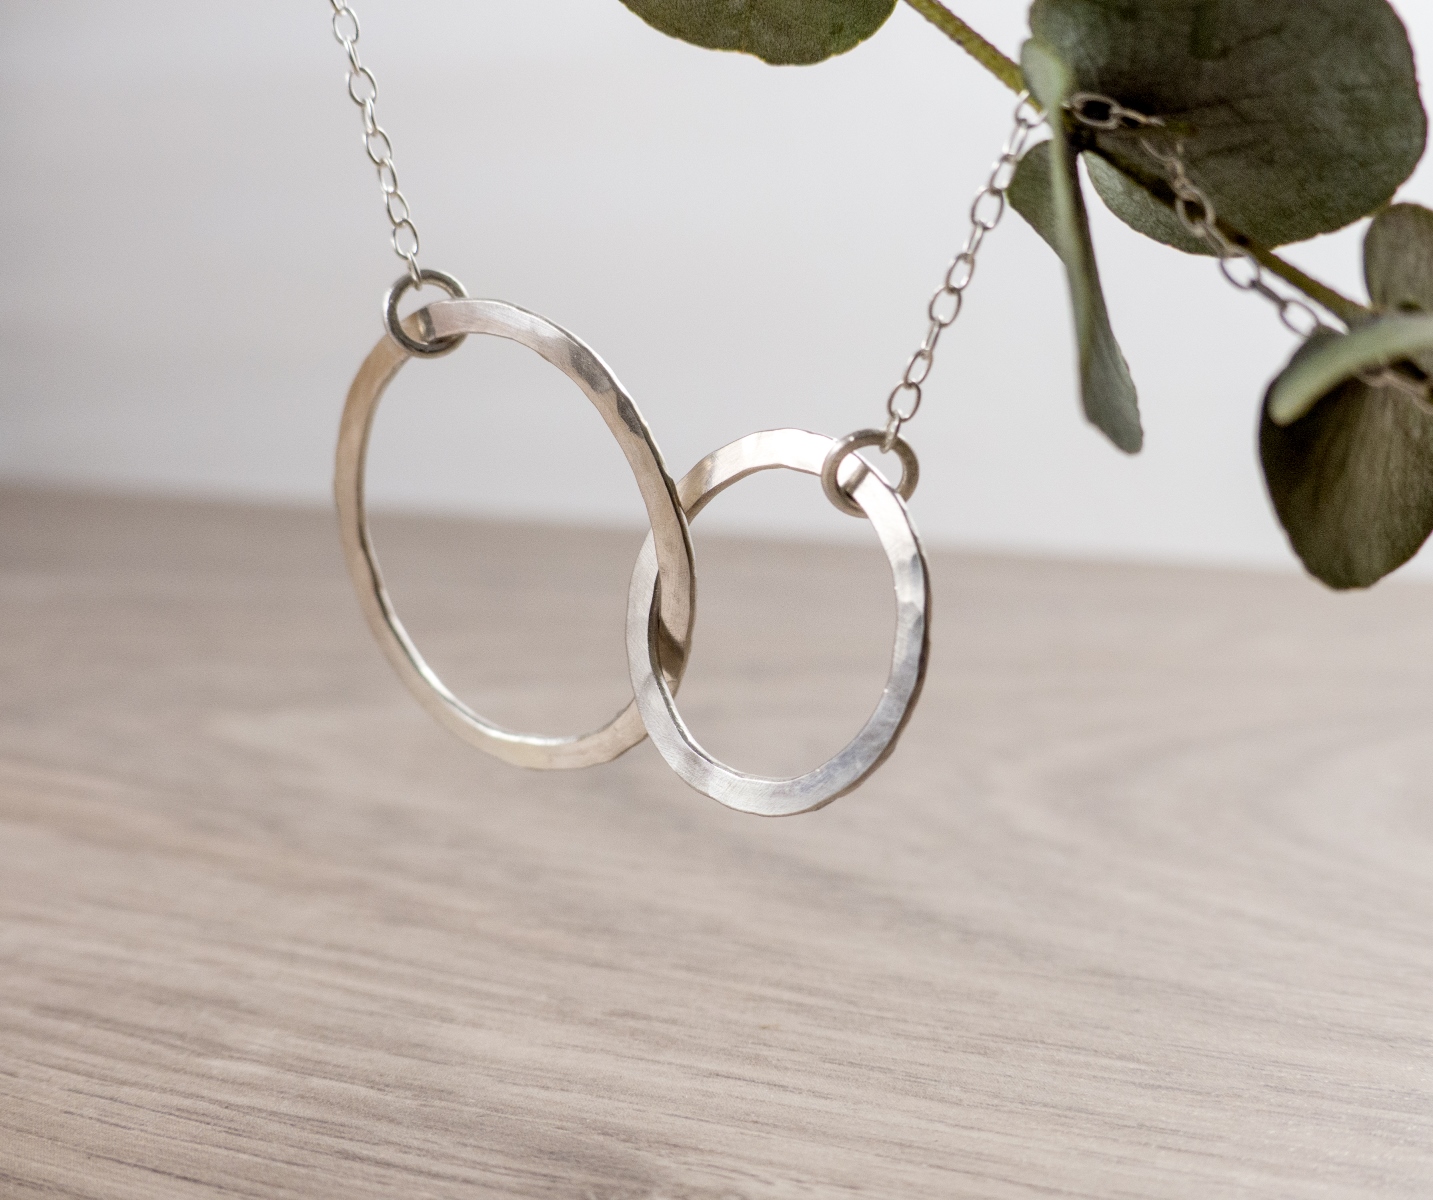 Three Interlocking Circles Necklace | Marsha DrewJewellery